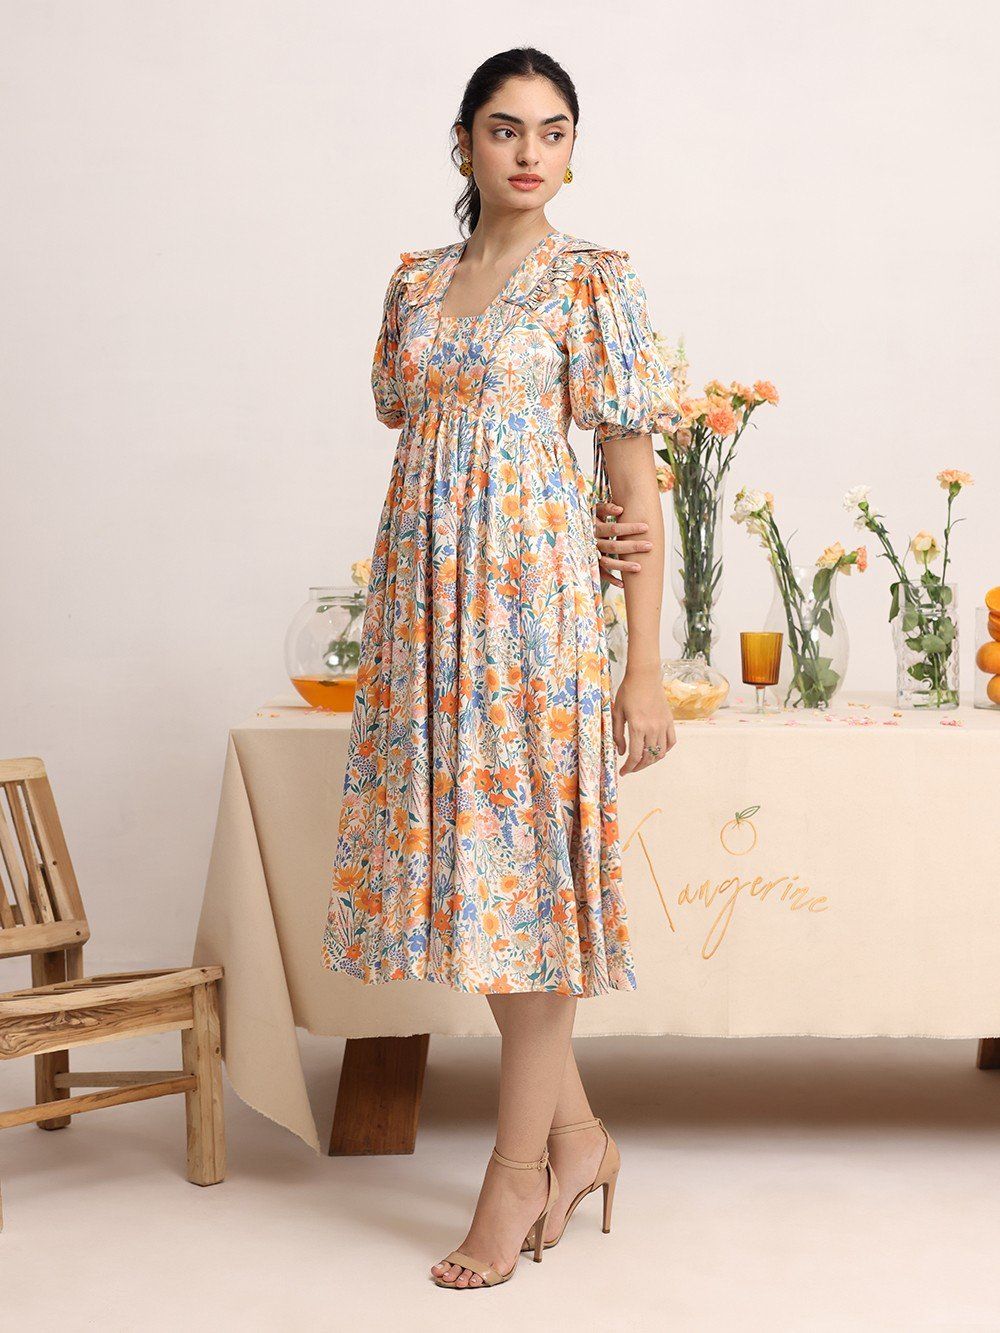 Buy Orange Printed Rayon Dress | BGTG07/BG37APR | The loom